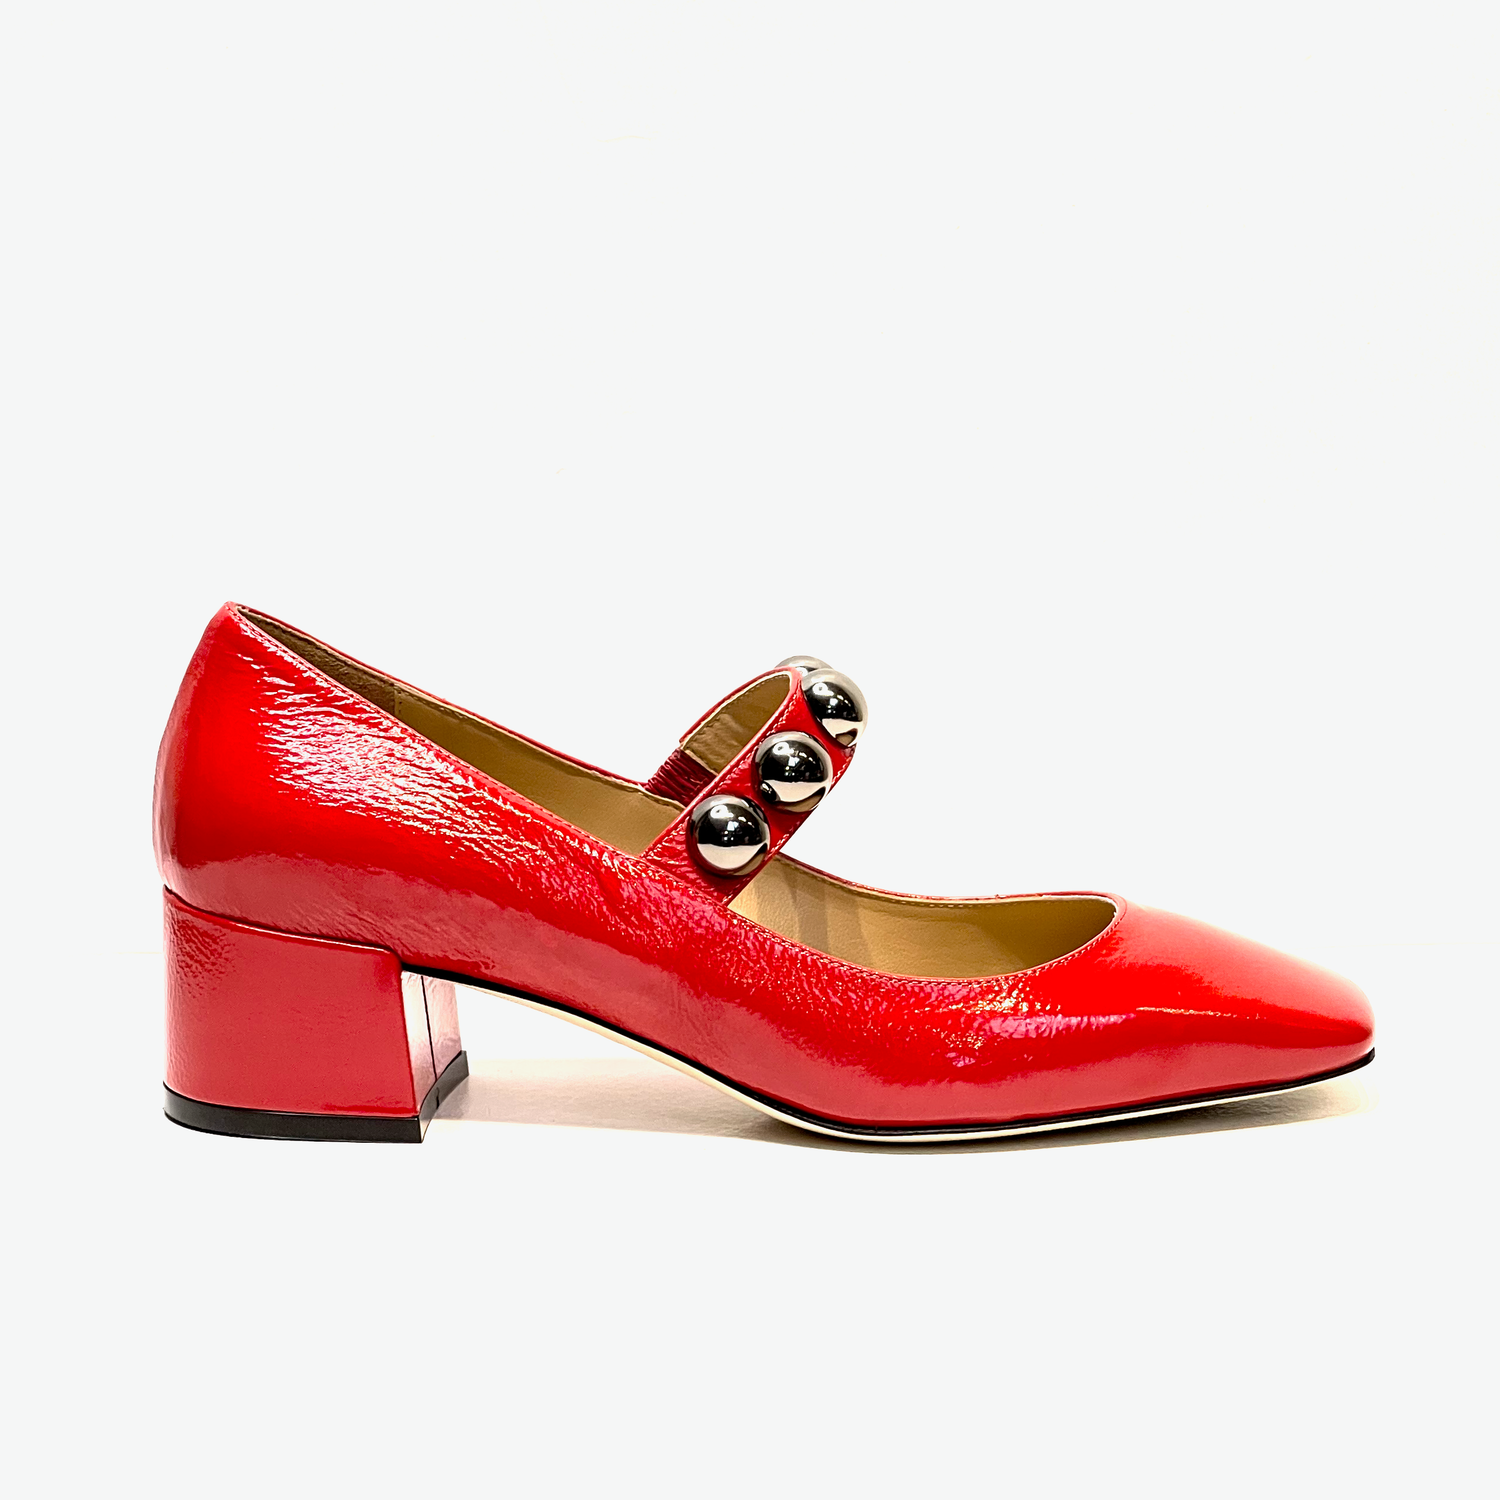 Cecilia Quinn | Shoe Boutiques – Cecilia Quinn Shoes